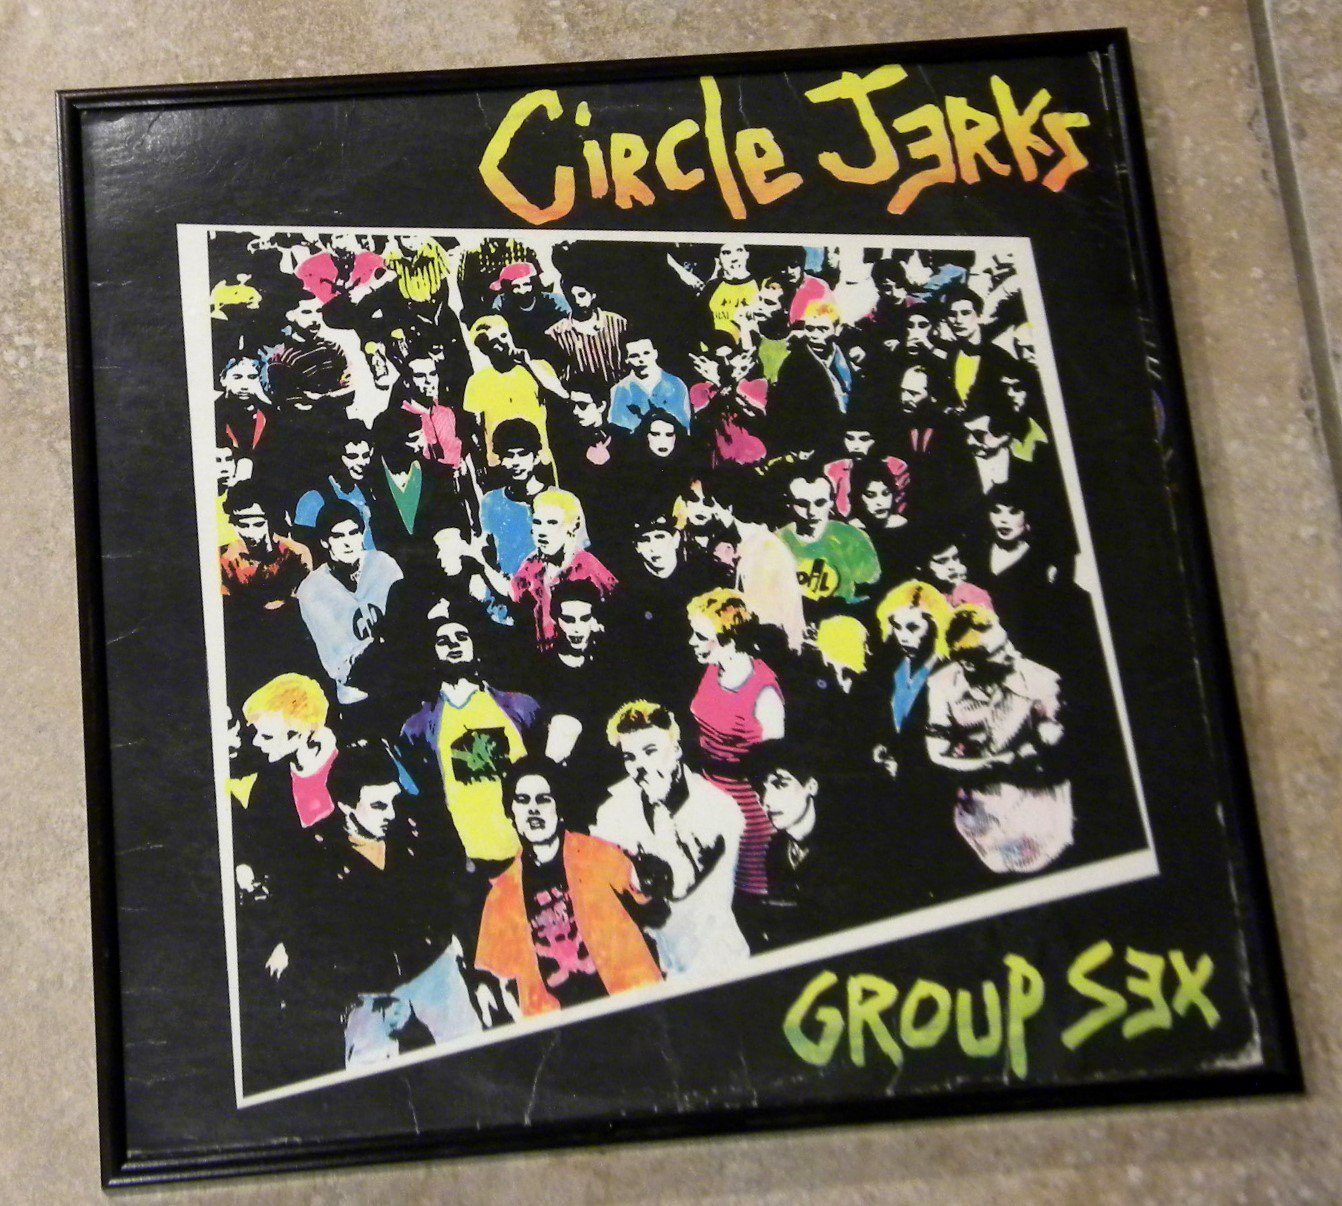 Group Sex Circle Jerks Framed Vintage Record Album Cover